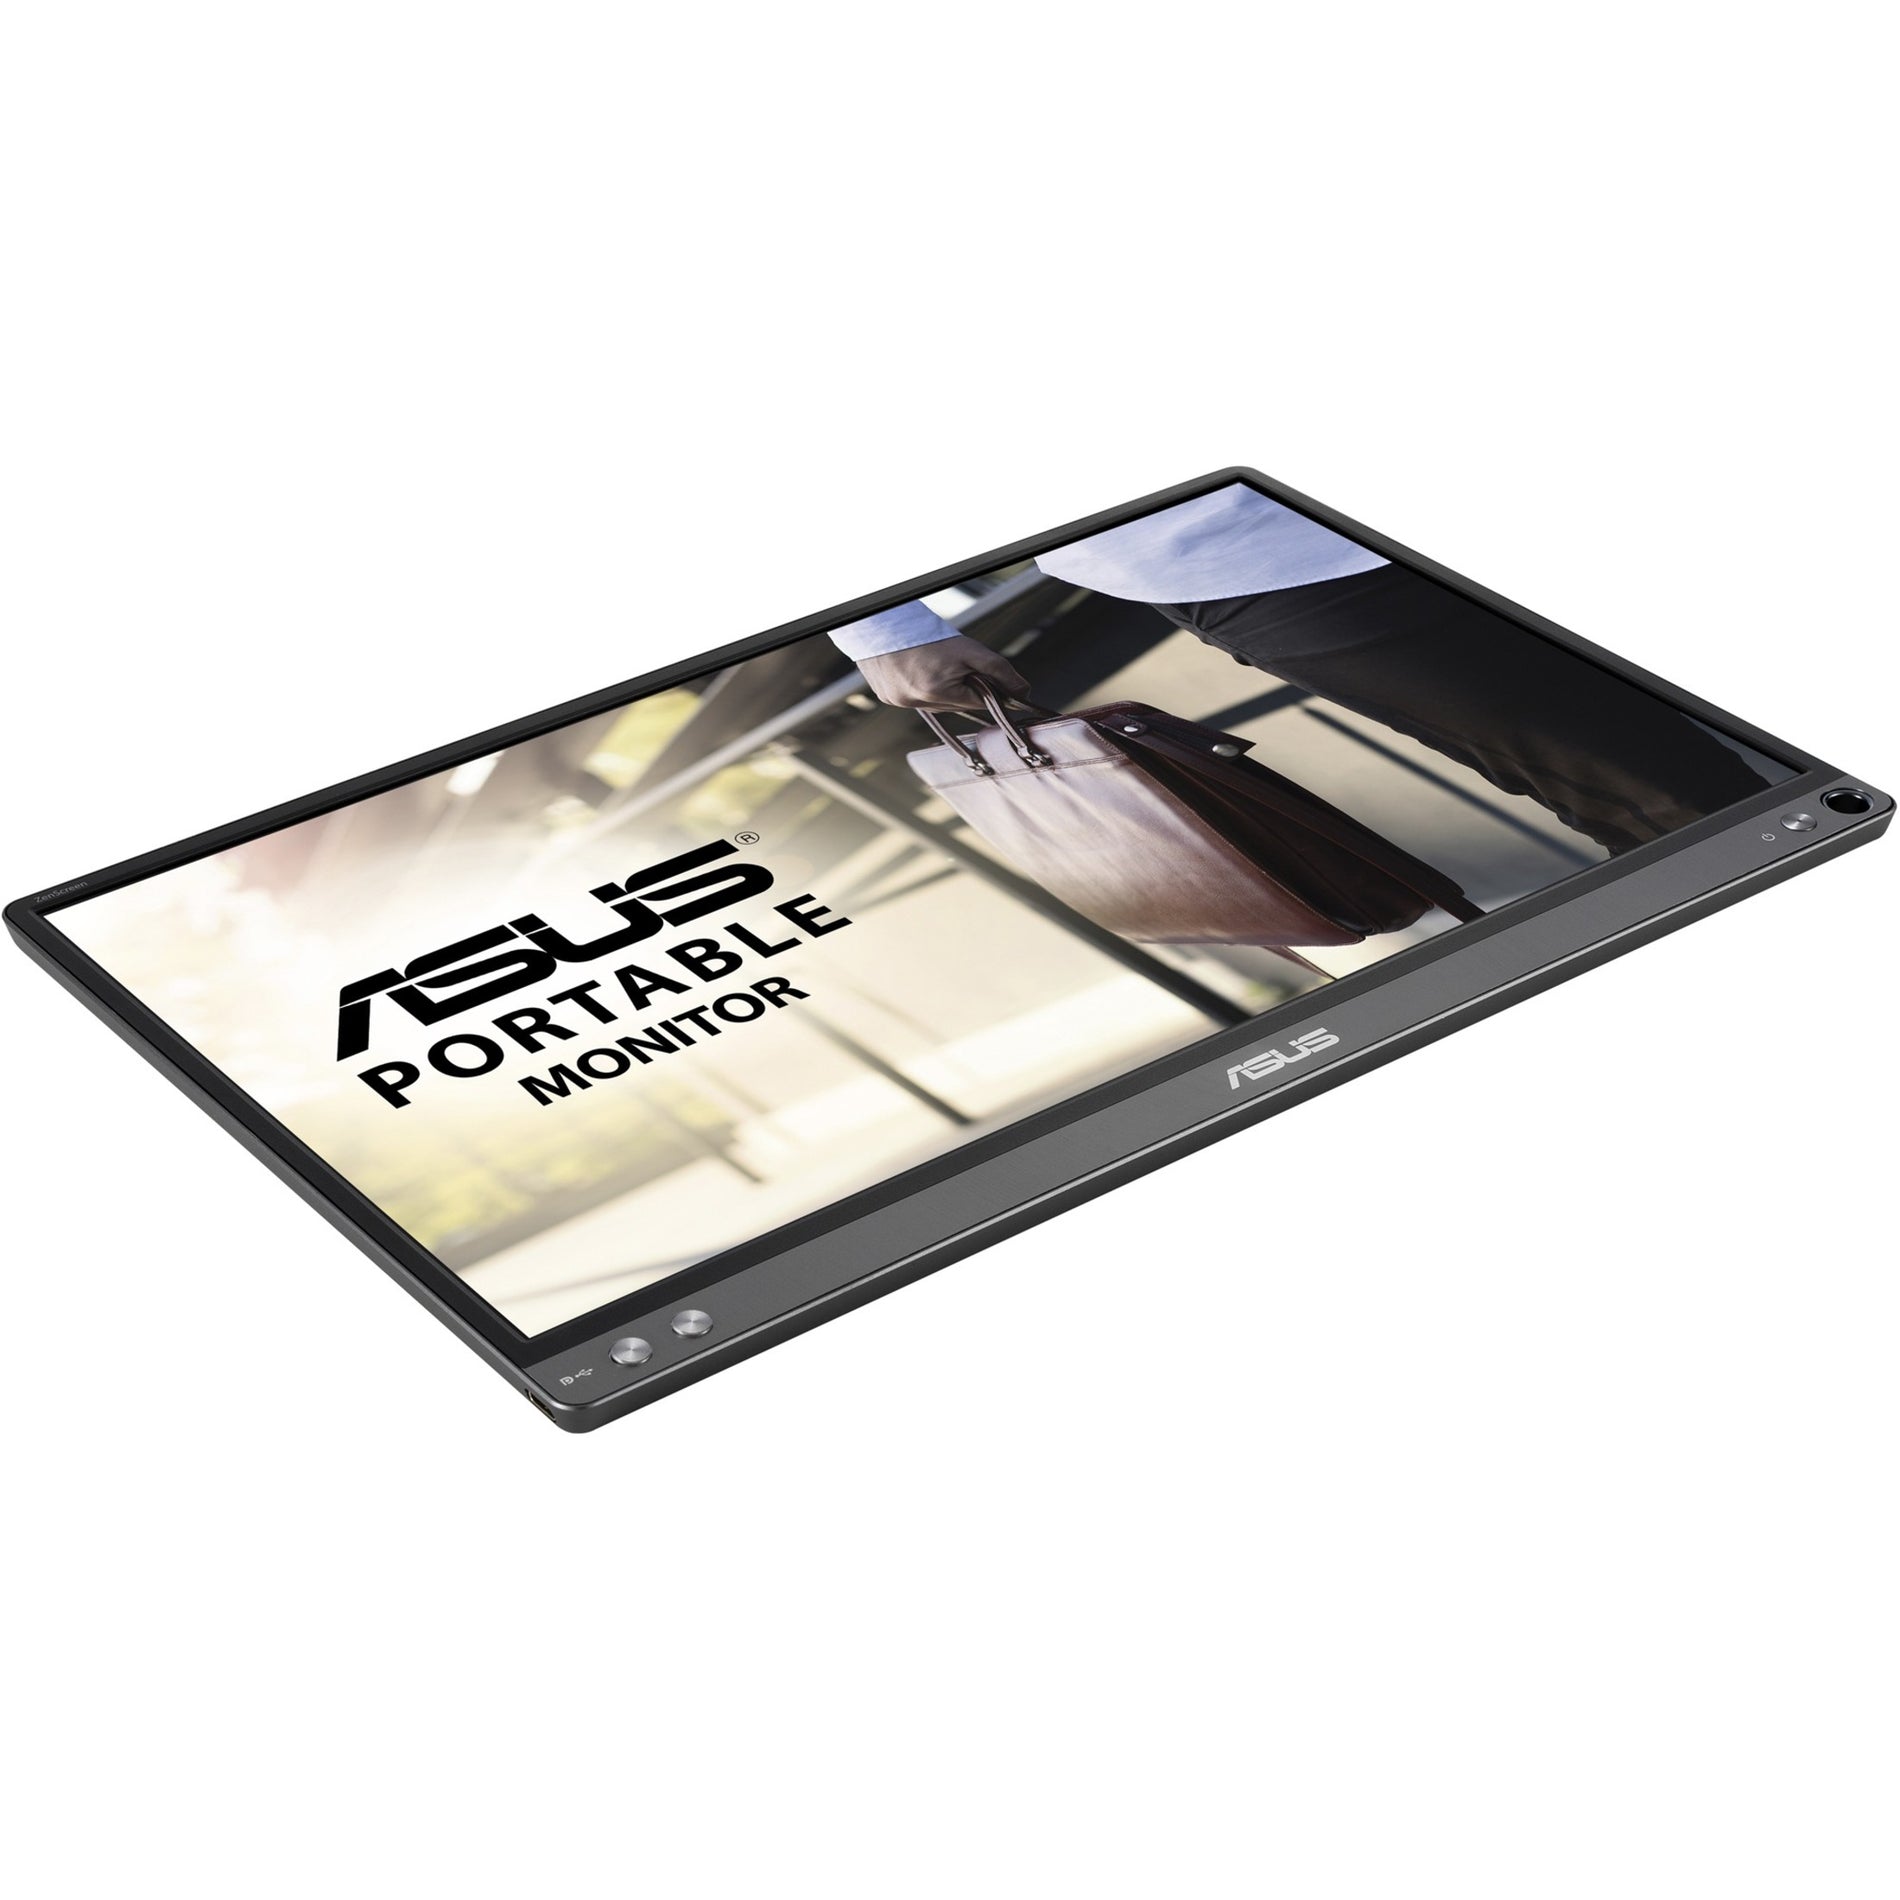 Asus MB16ACE ZenScreen 15.6" Full HD LCD Monitor, Portable USB Type-C, Dark Gray